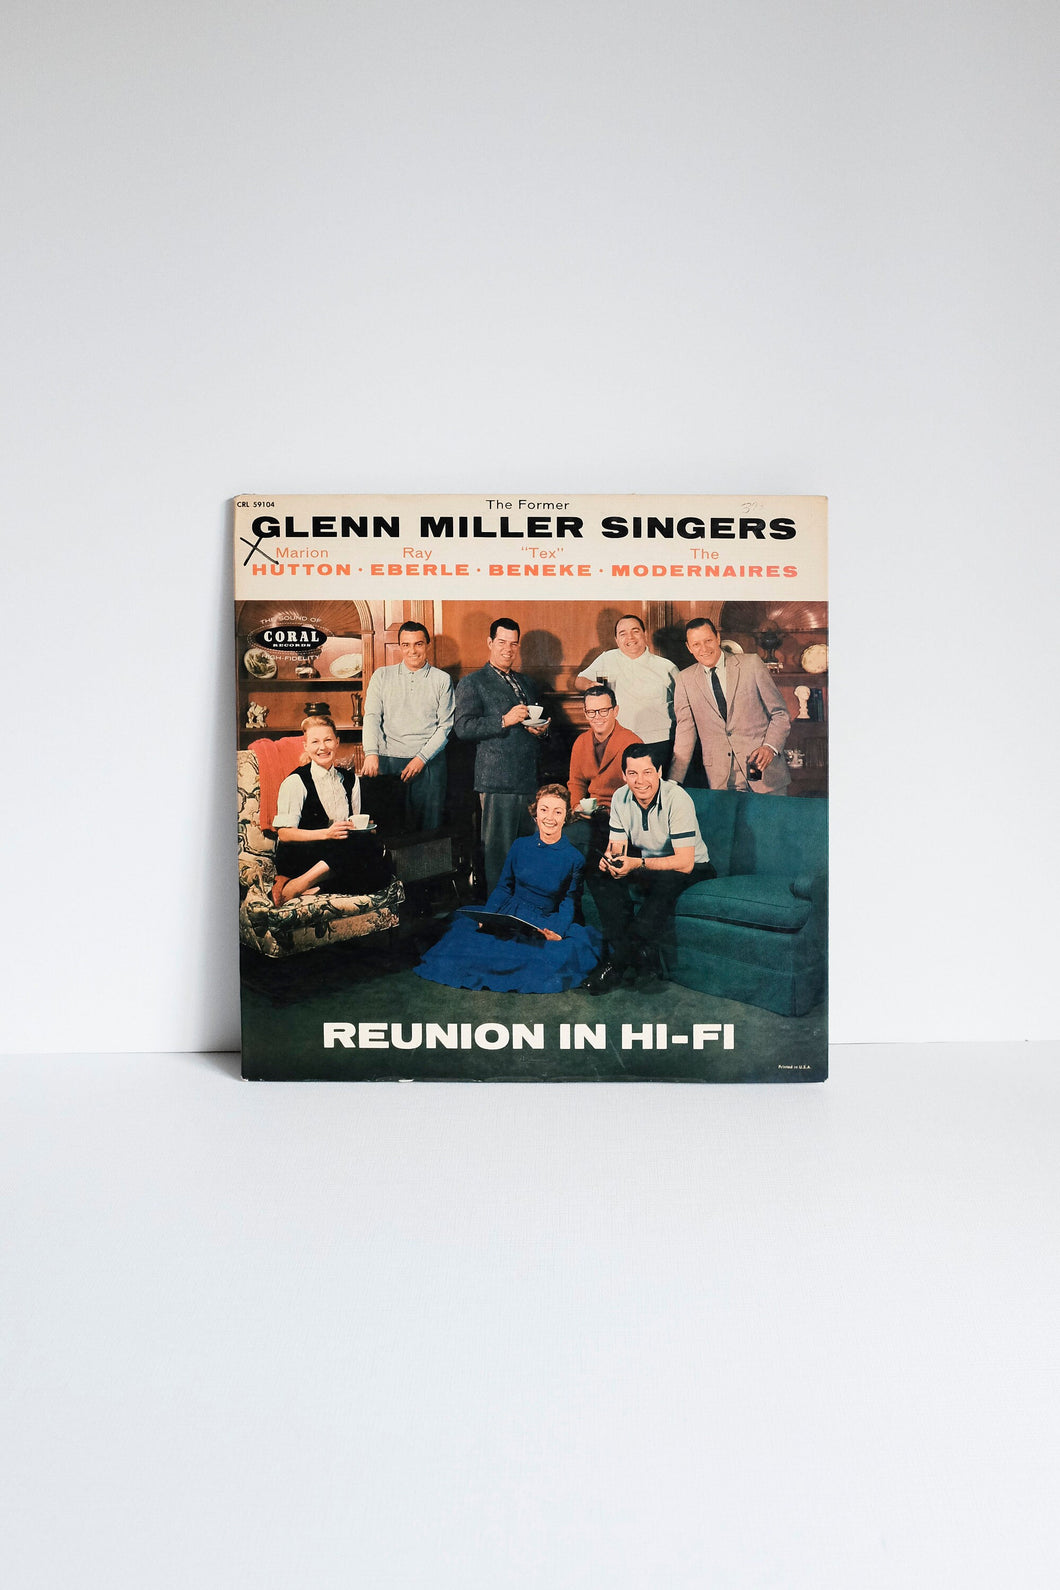 Vintage Vinyl Record Lp - The former Glenn Miller Singers Reunion in Hi-Fi